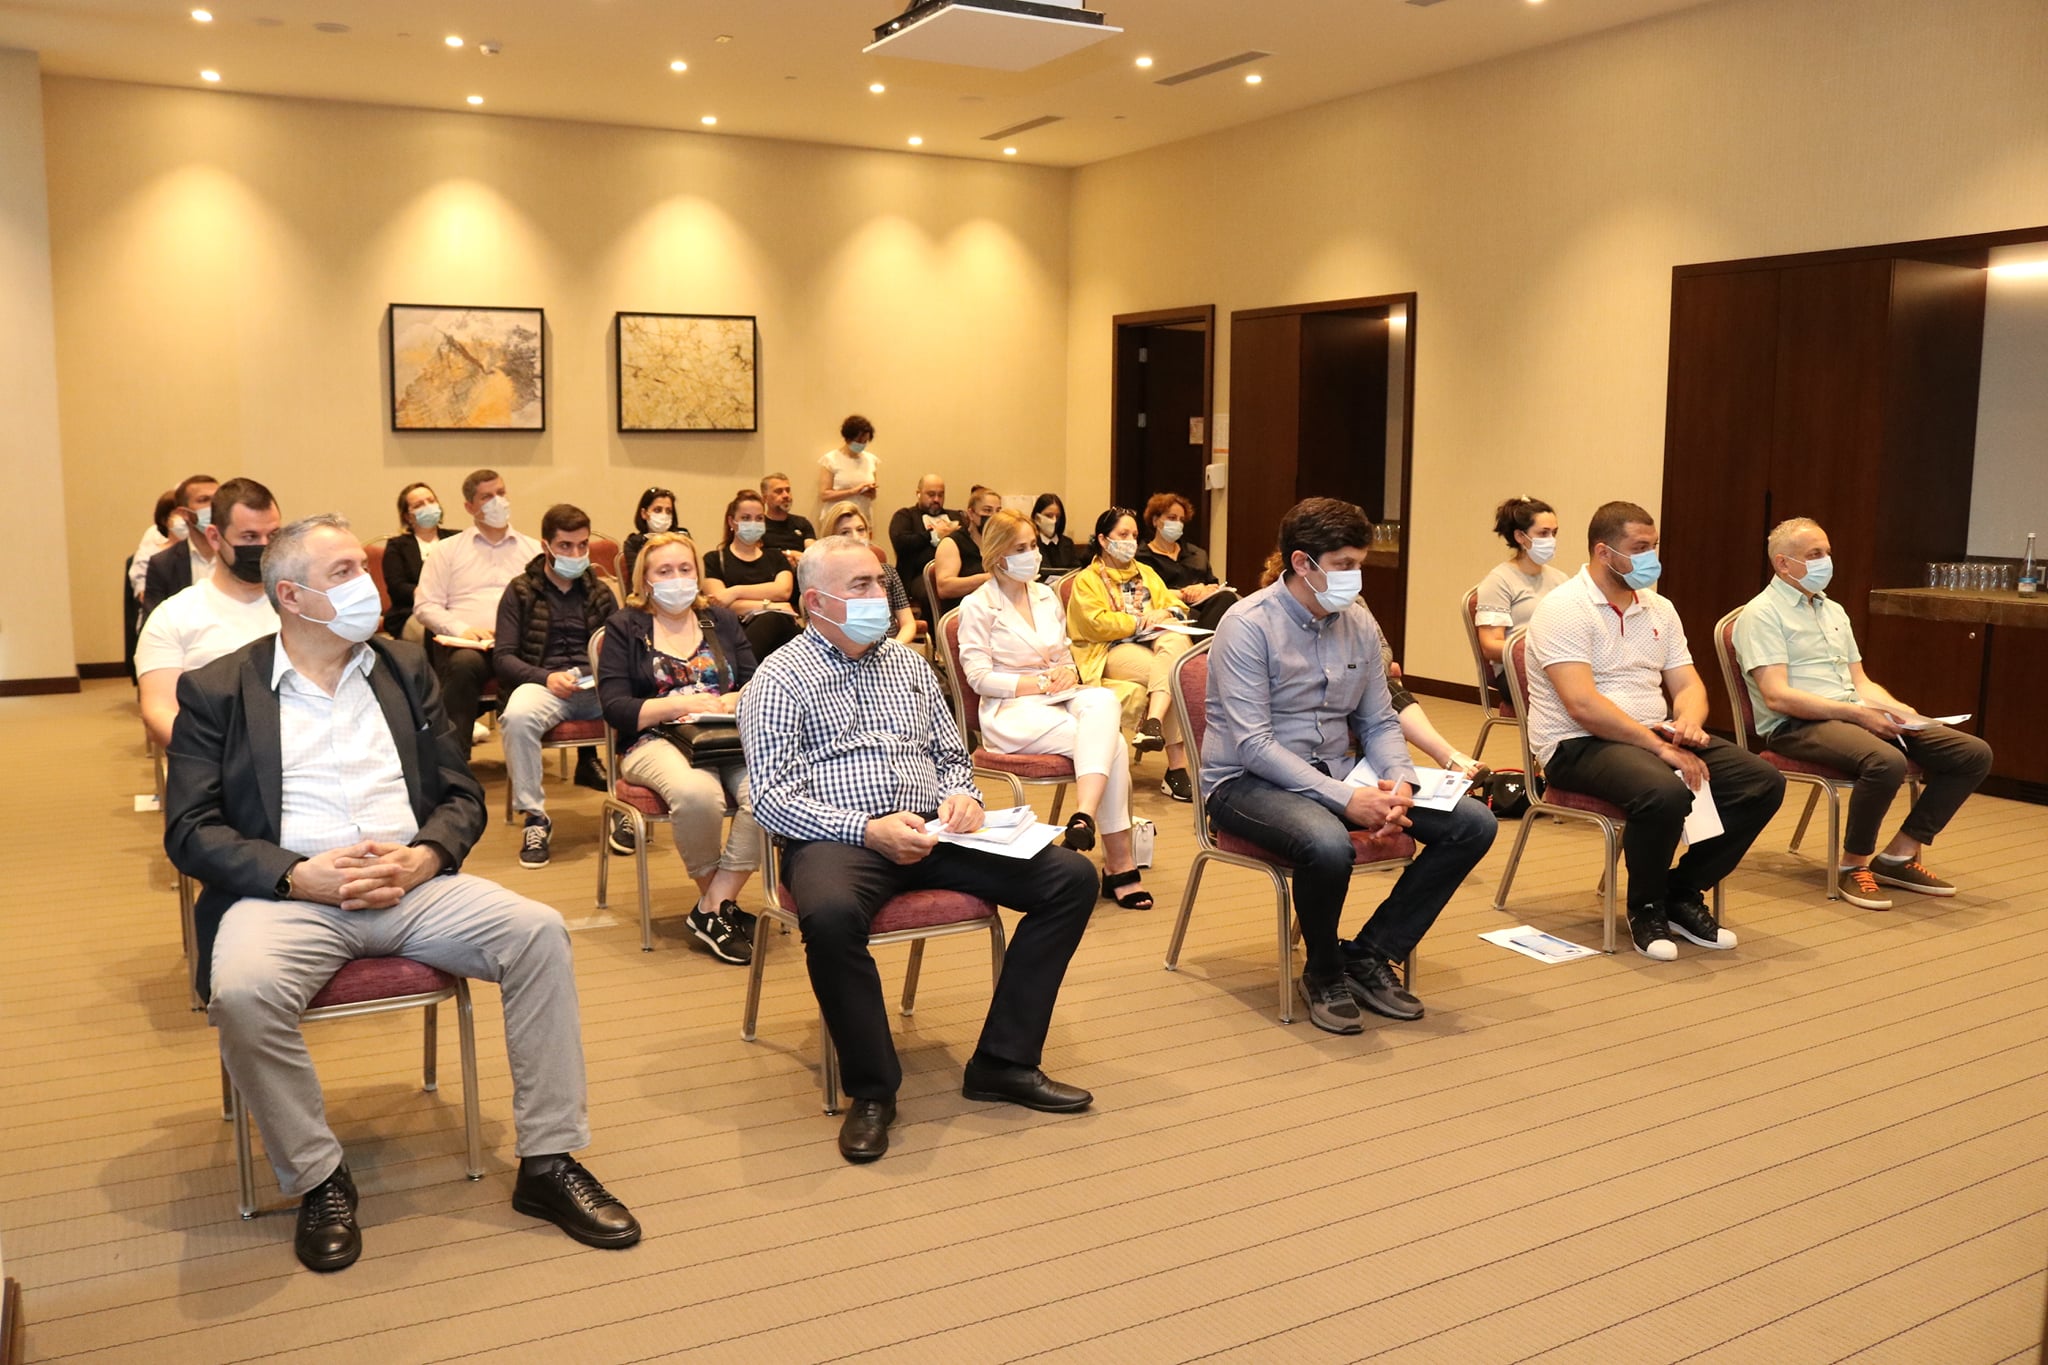 NFA is introducing HACCP principles to business operators in Batumi